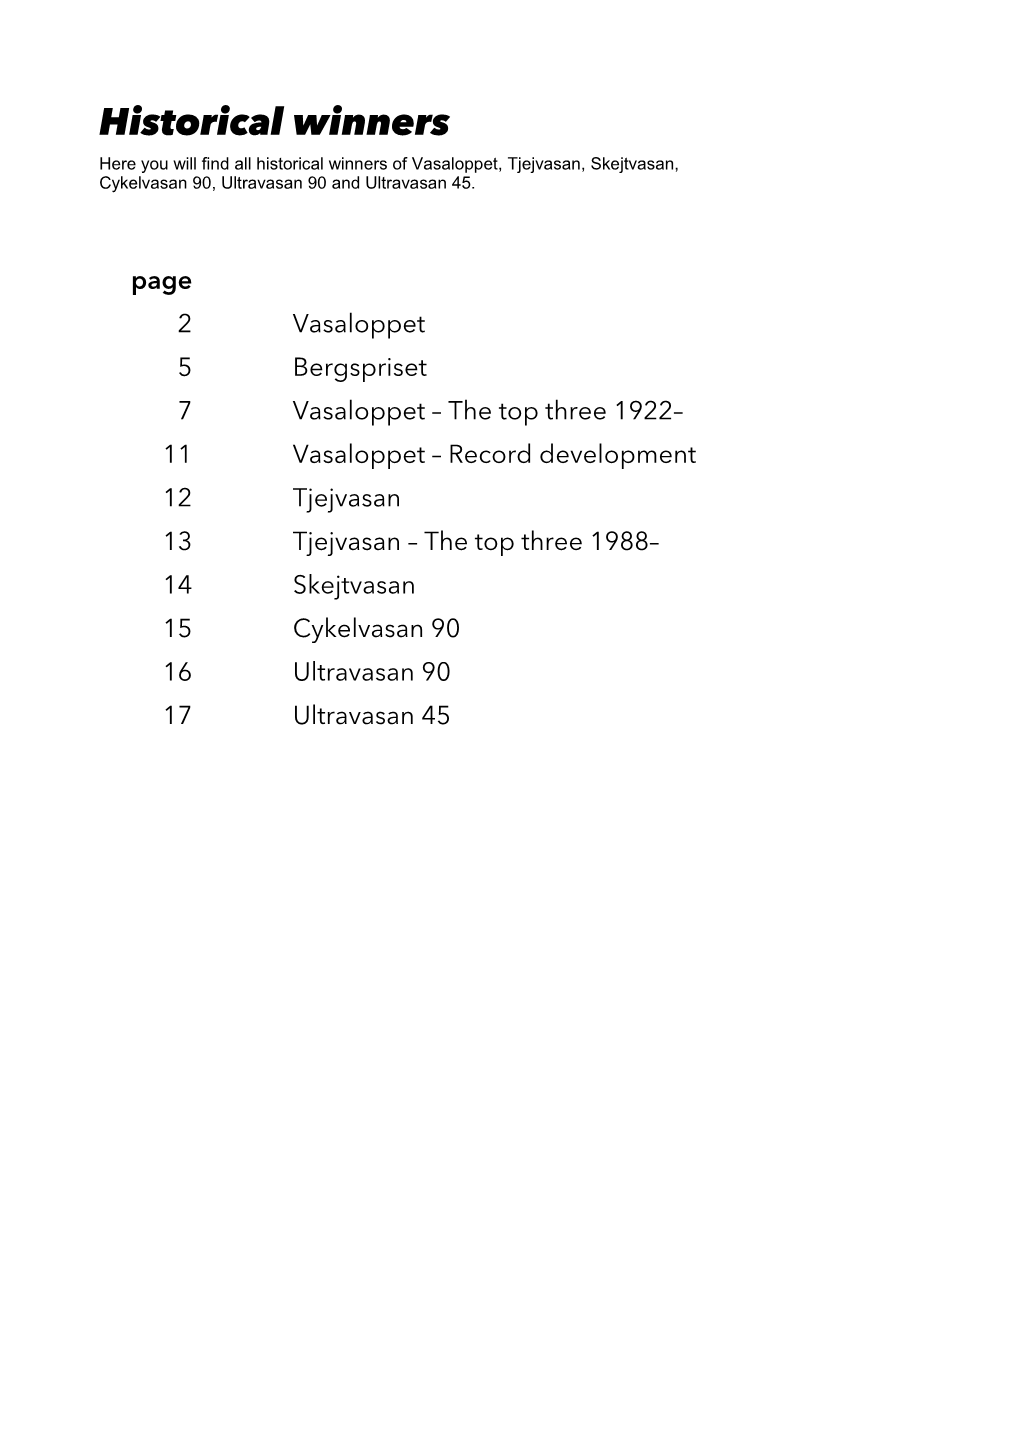 Historical Winners Here You Will Find All Historical Winners of Vasaloppet, Tjejvasan, Skejtvasan, Cykelvasan 90, Ultravasan 90 and Ultravasan 45